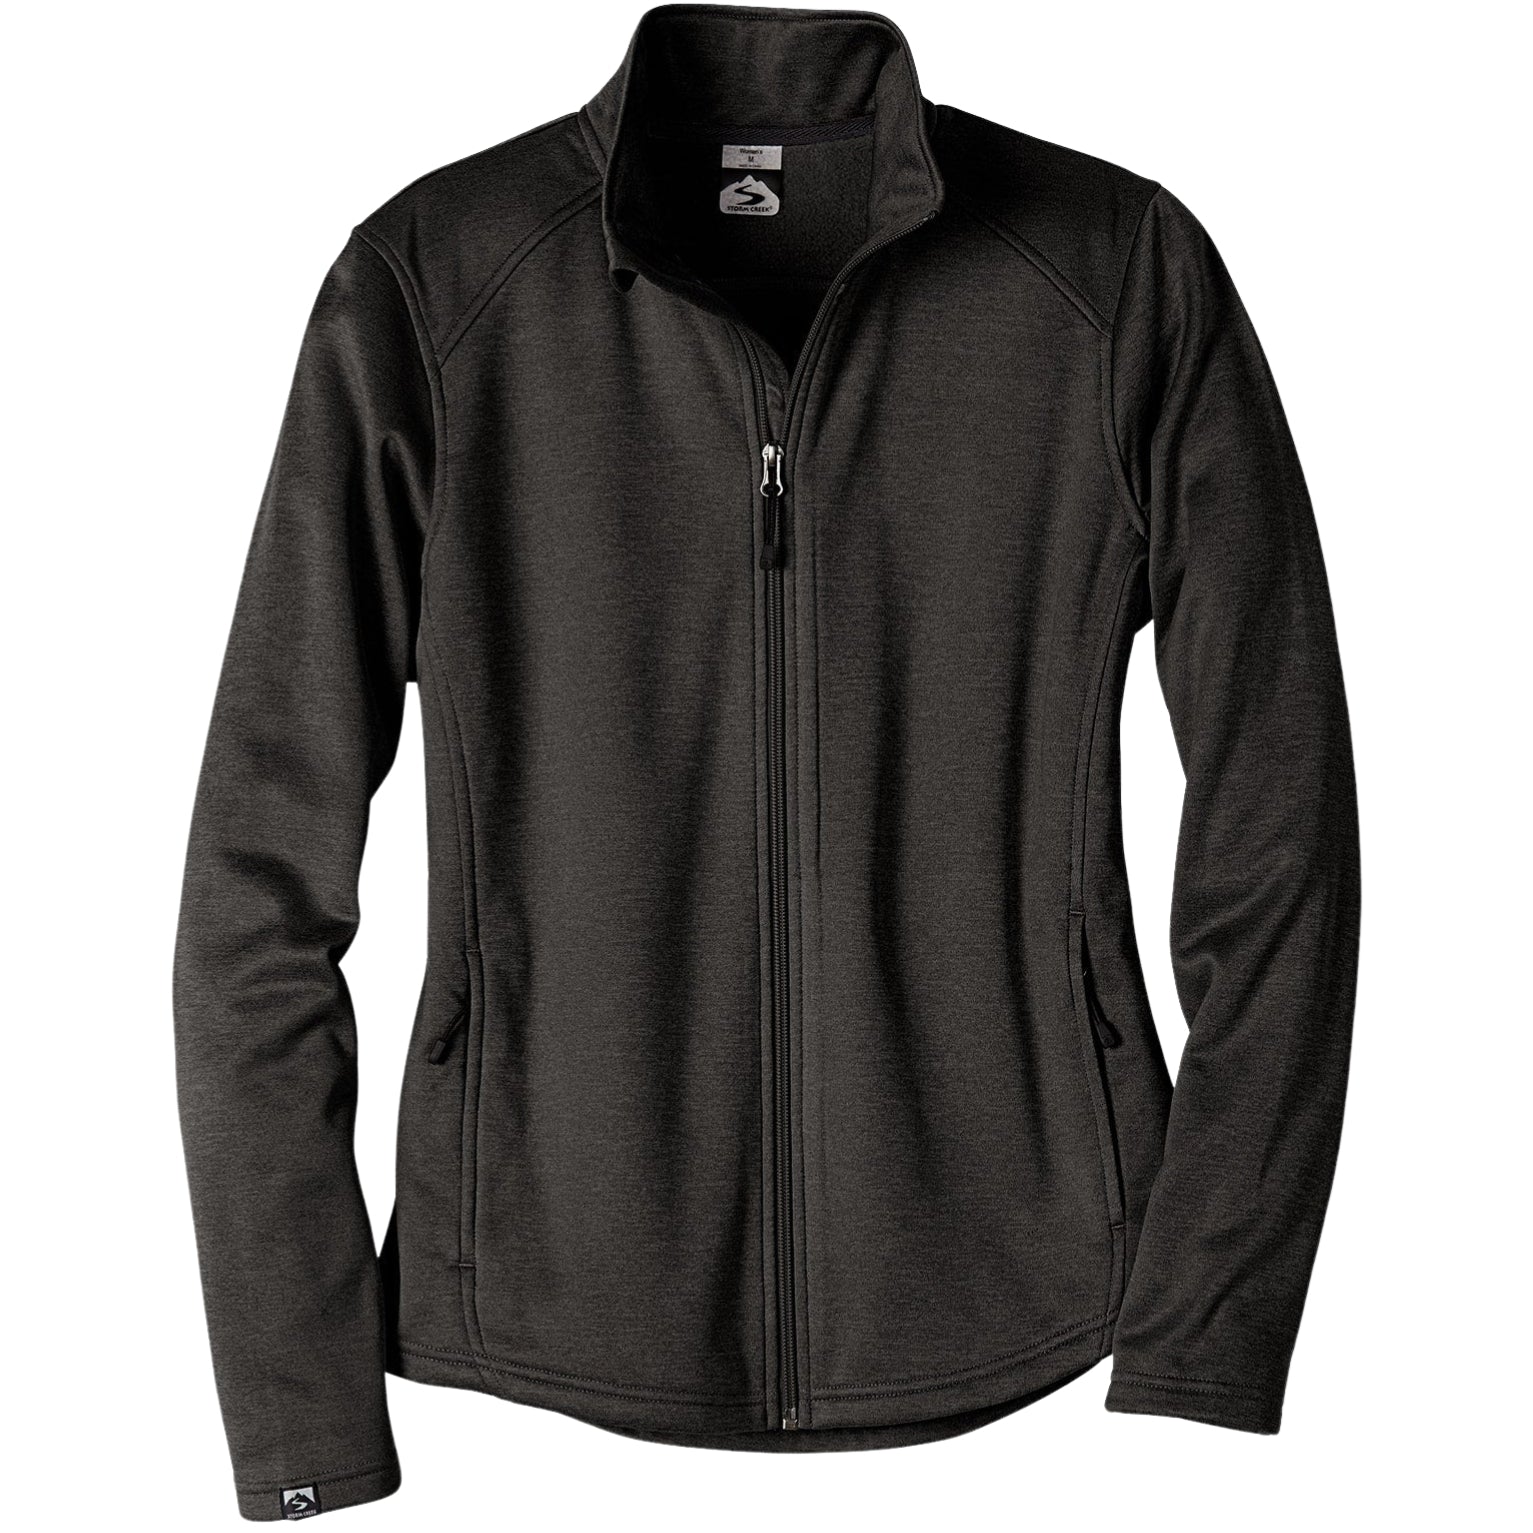 Customizable Storm Creek women's Stabilizer performance fleece jacket in jet black.